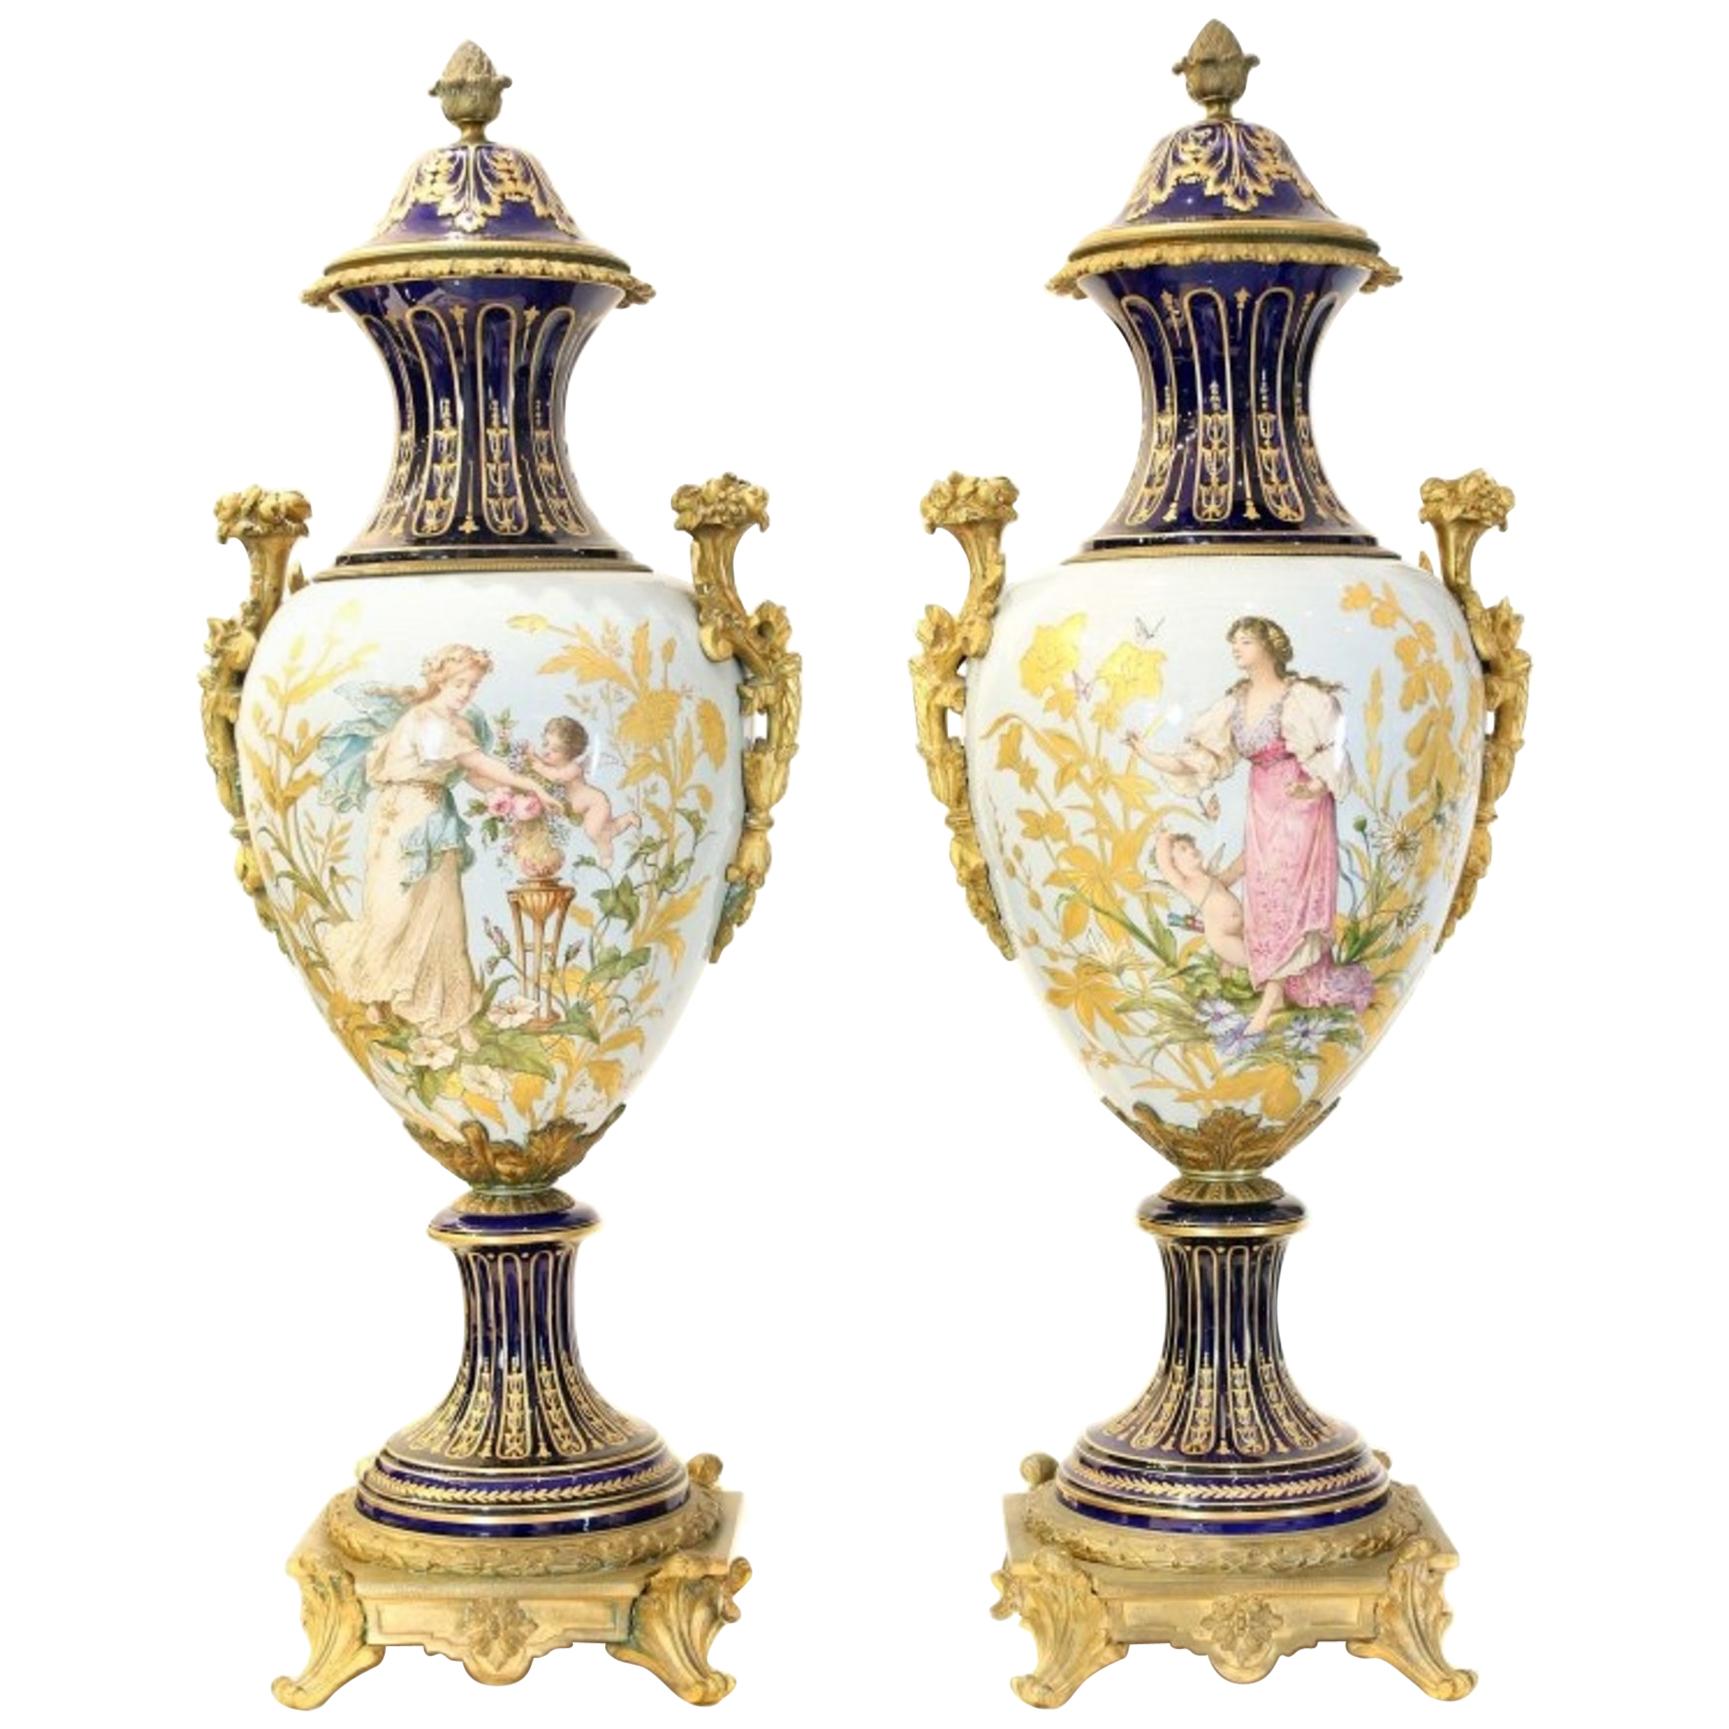 Fine Pair of Sevres Gilt Bronze-Mounted Painted, Parcel-Gilt Porcelain Vases